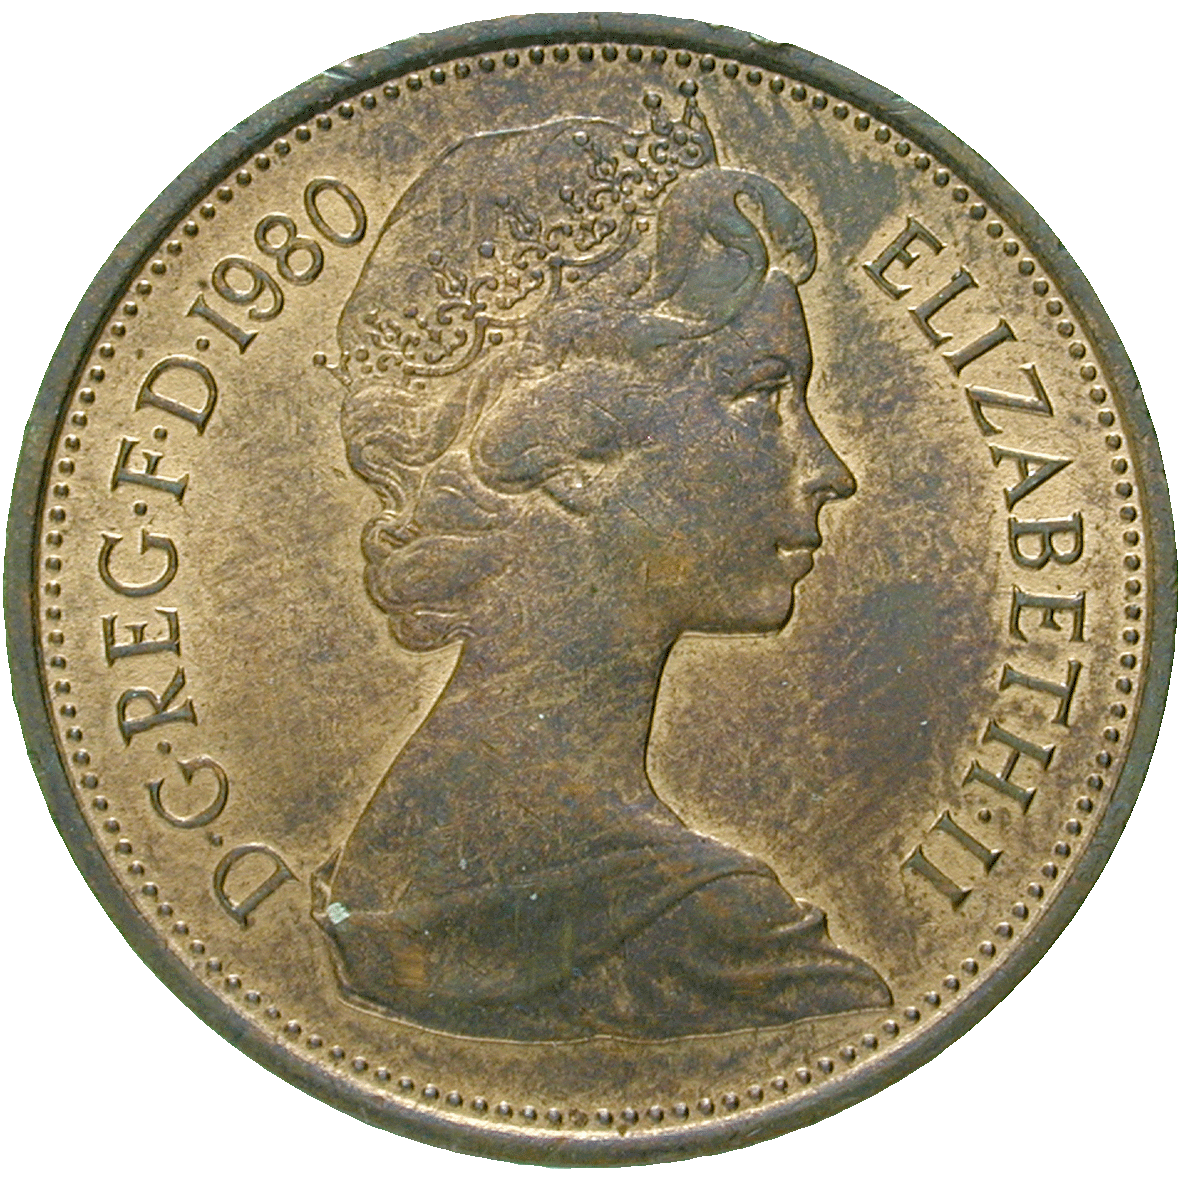 United Kingdom of Great Britain, Elizabeth II, 2 New Pence 1980 (obverse)